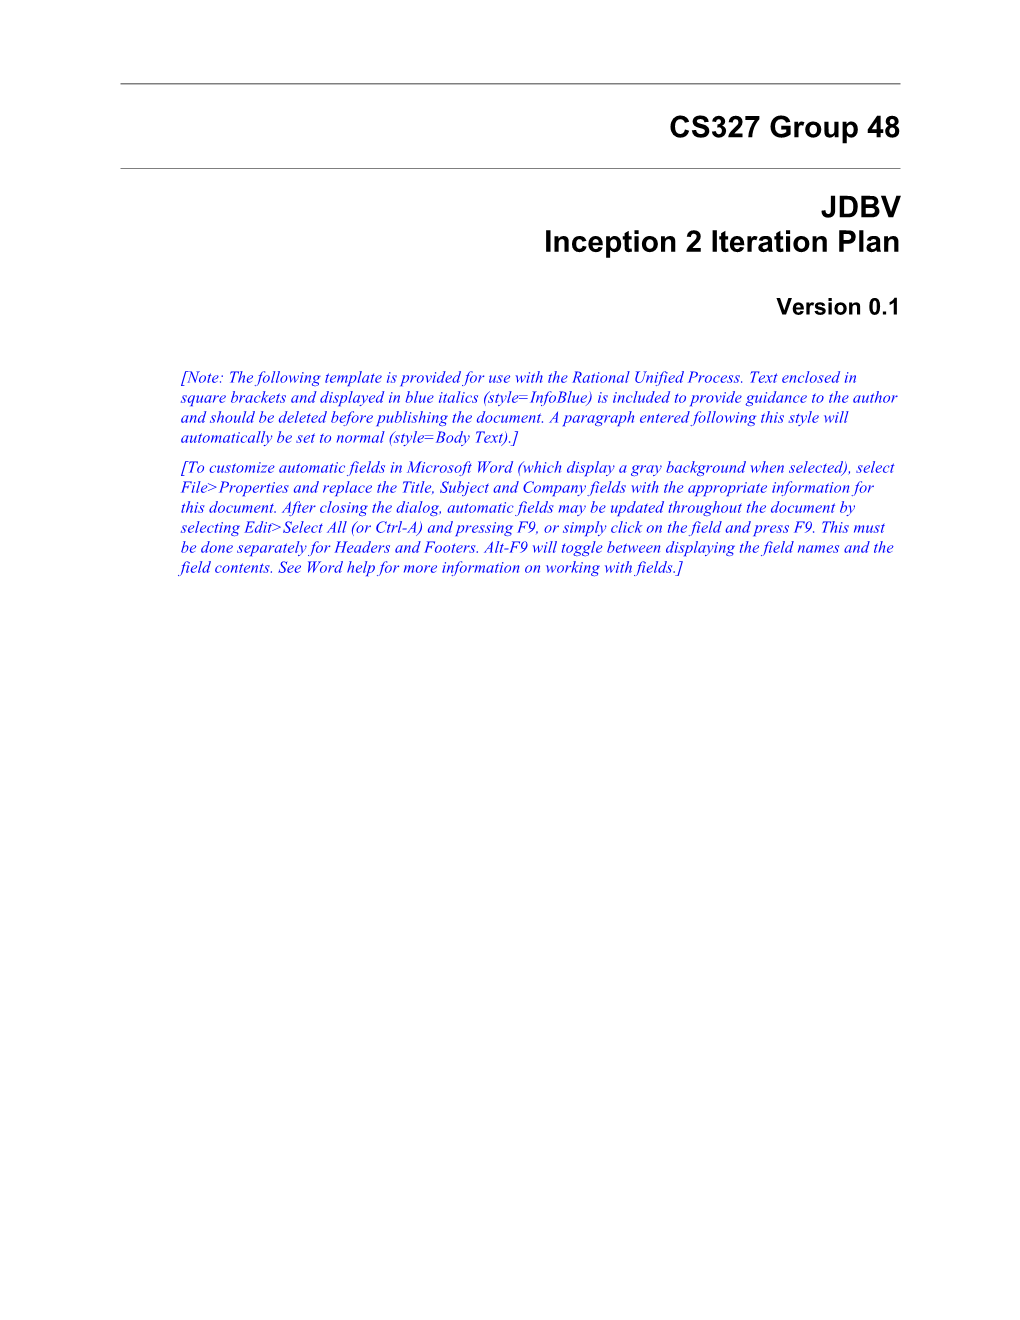 Inception 2 Iteration Plan